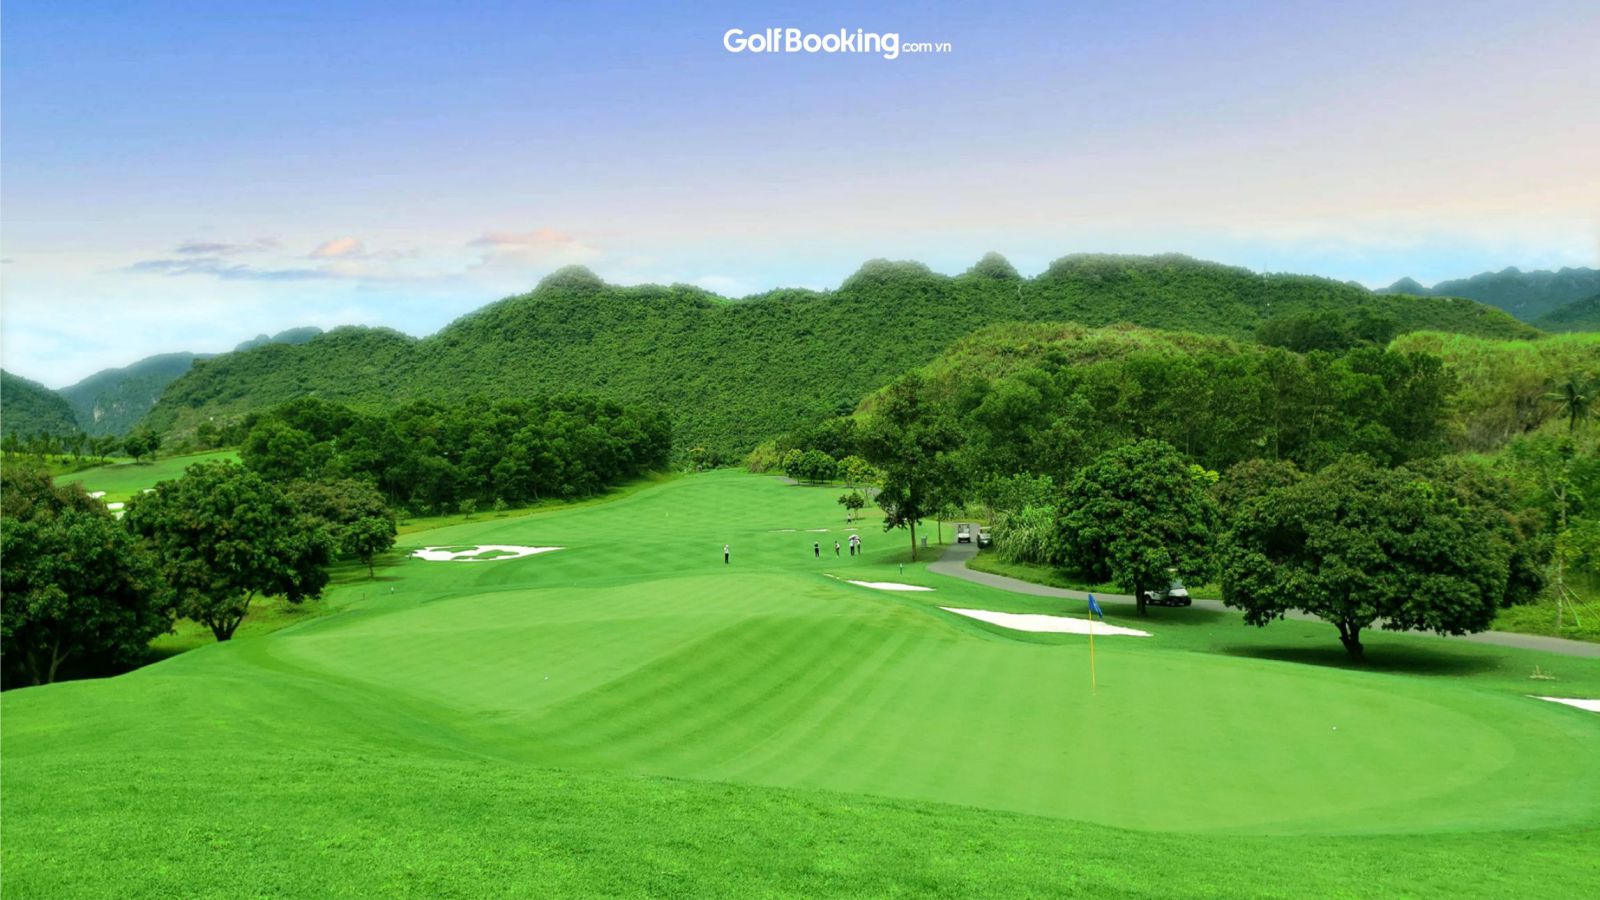 Stone Valley Golf Resort, sân golf Kim Bảng, Sân golf Hà Nam, sân golf 36 hole, sân golf miền bắc, noth golf course,